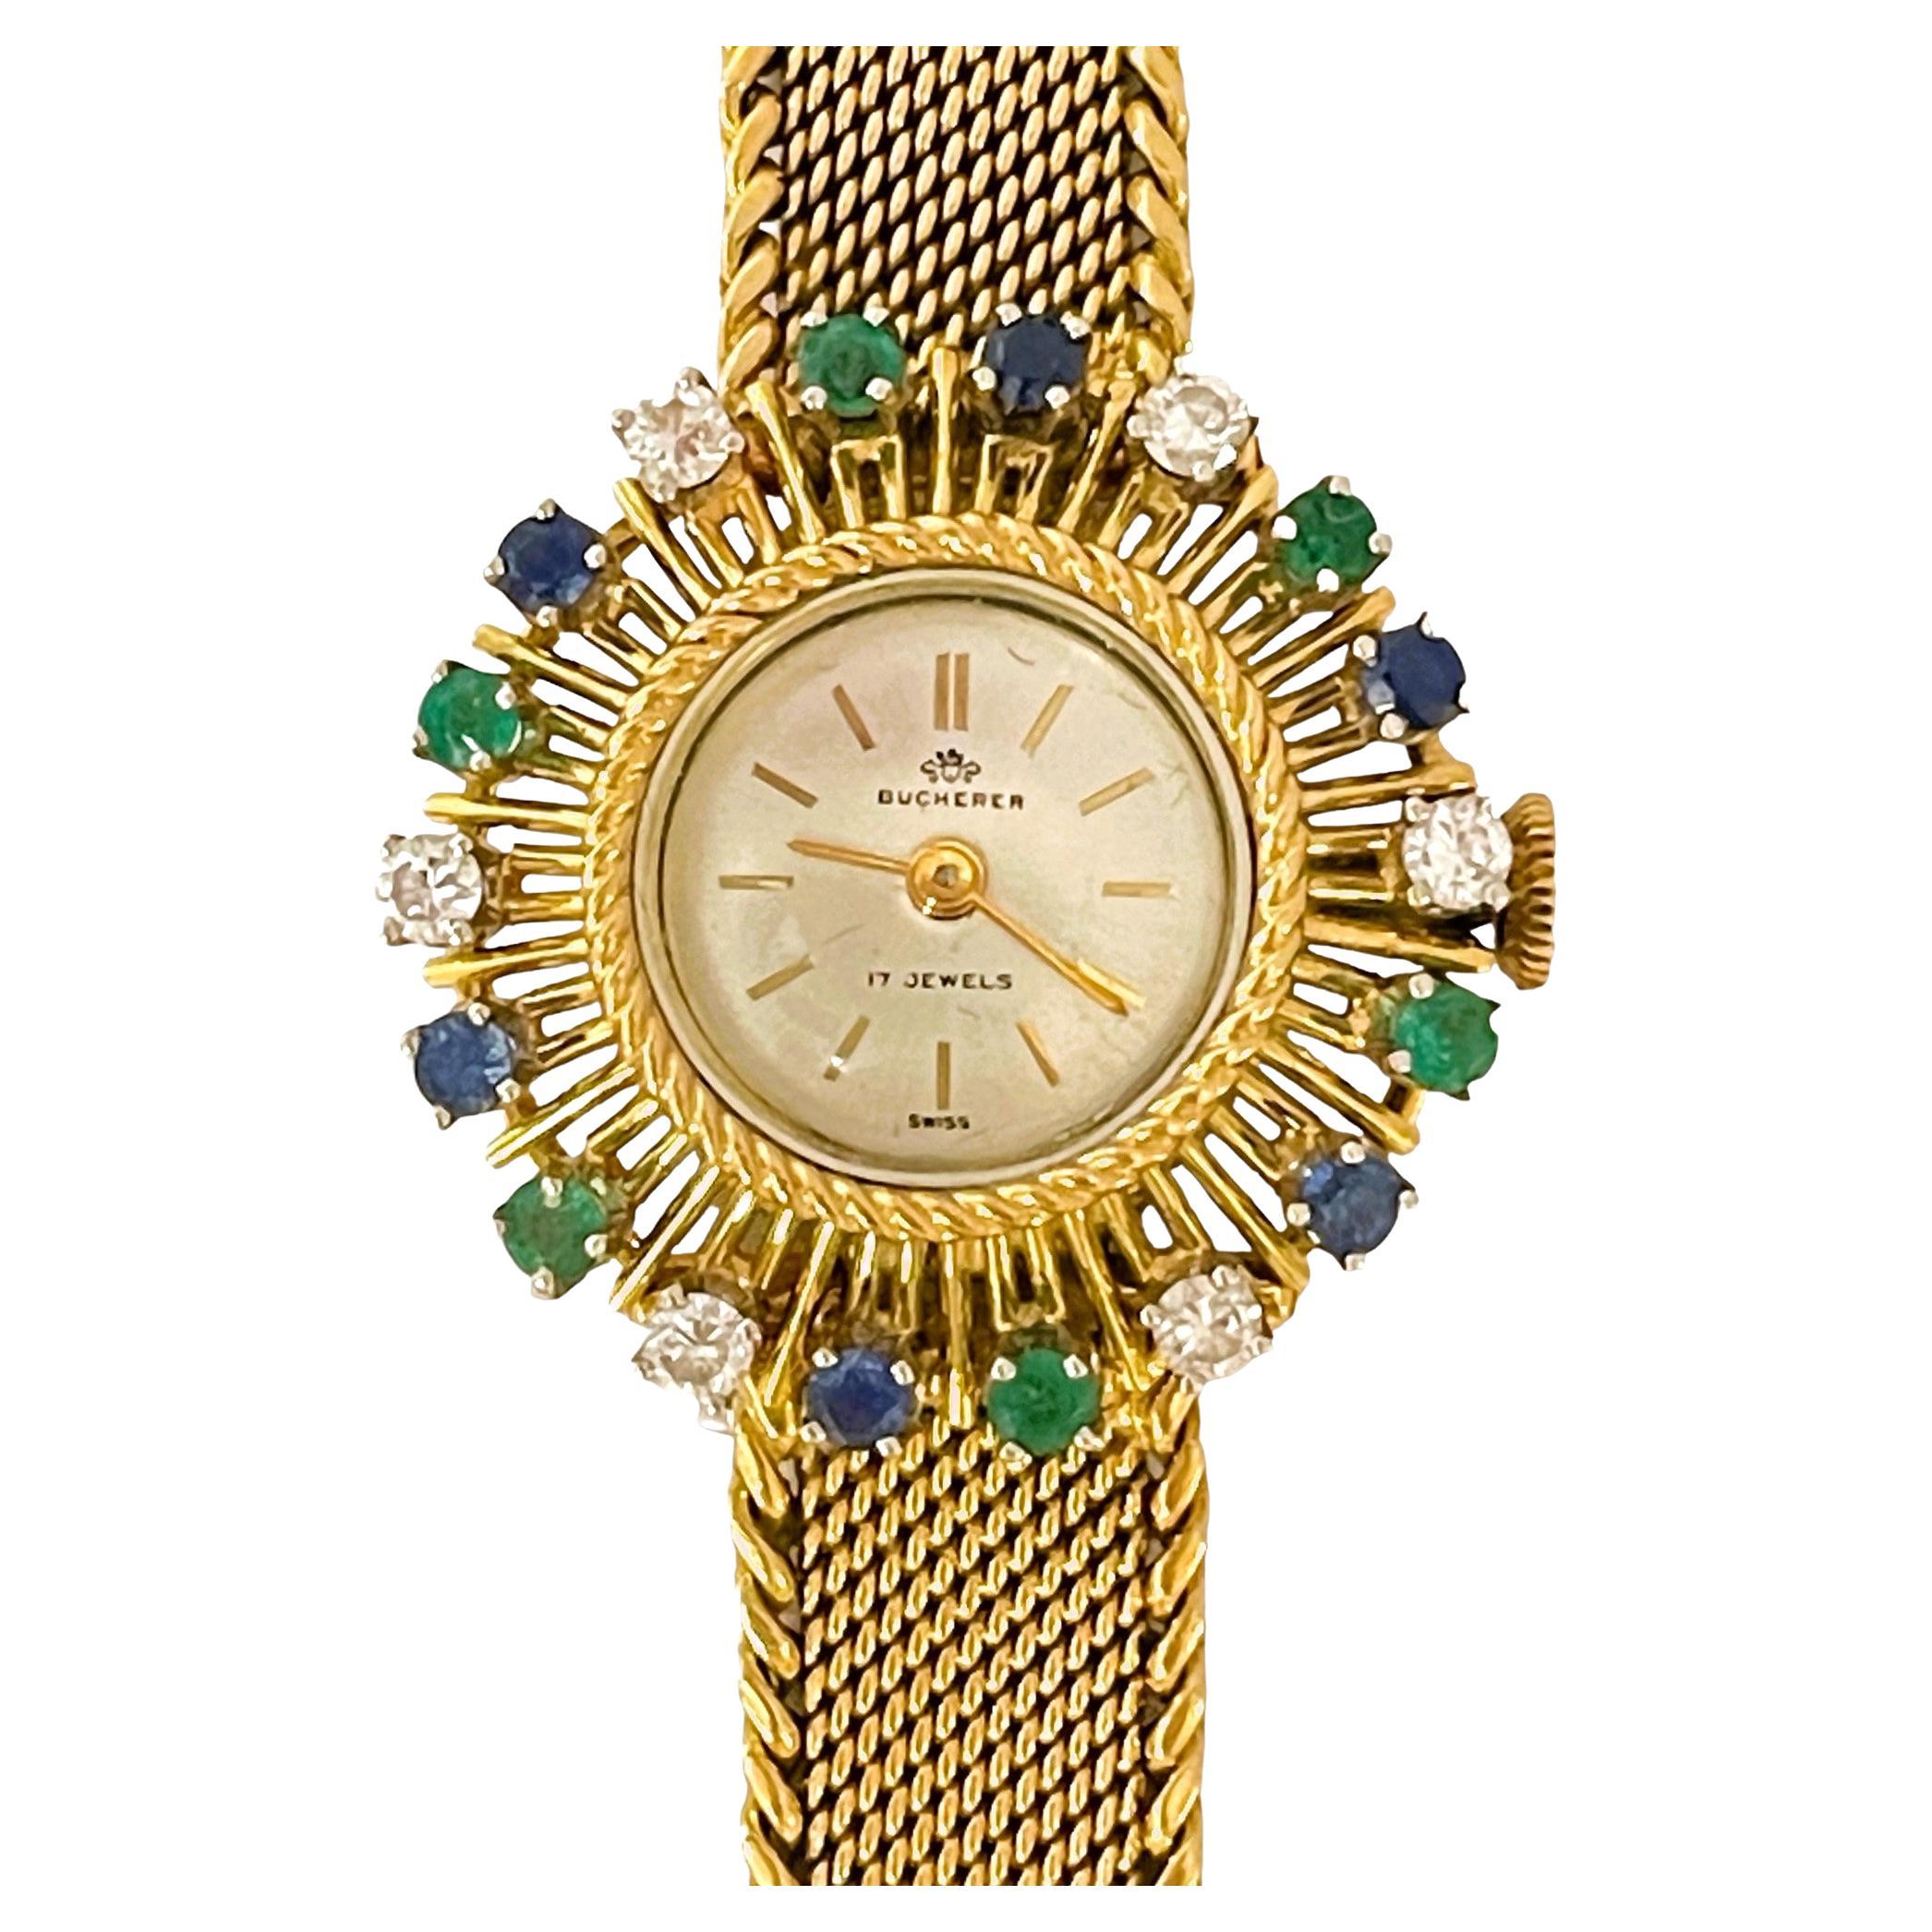 18k Bucherer Quartz Watch with Diamonds, Sapphires & Emeralds with GIA Appraisal